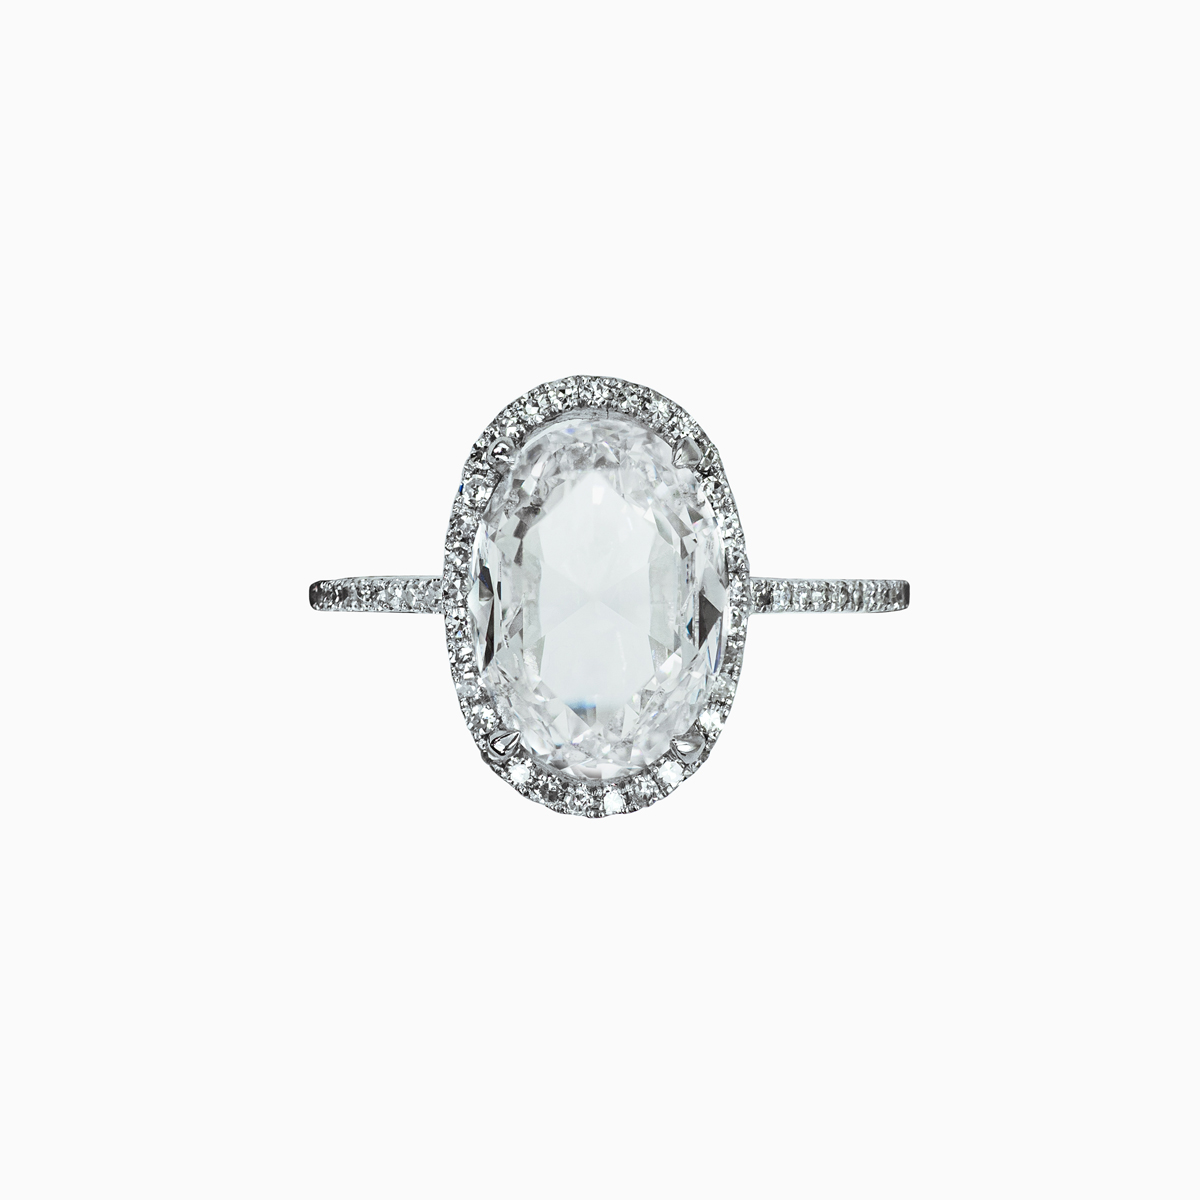 Lonzano Vintage Cut Diamond Halo Halo Engagement Ring with Rose Cut Diamond